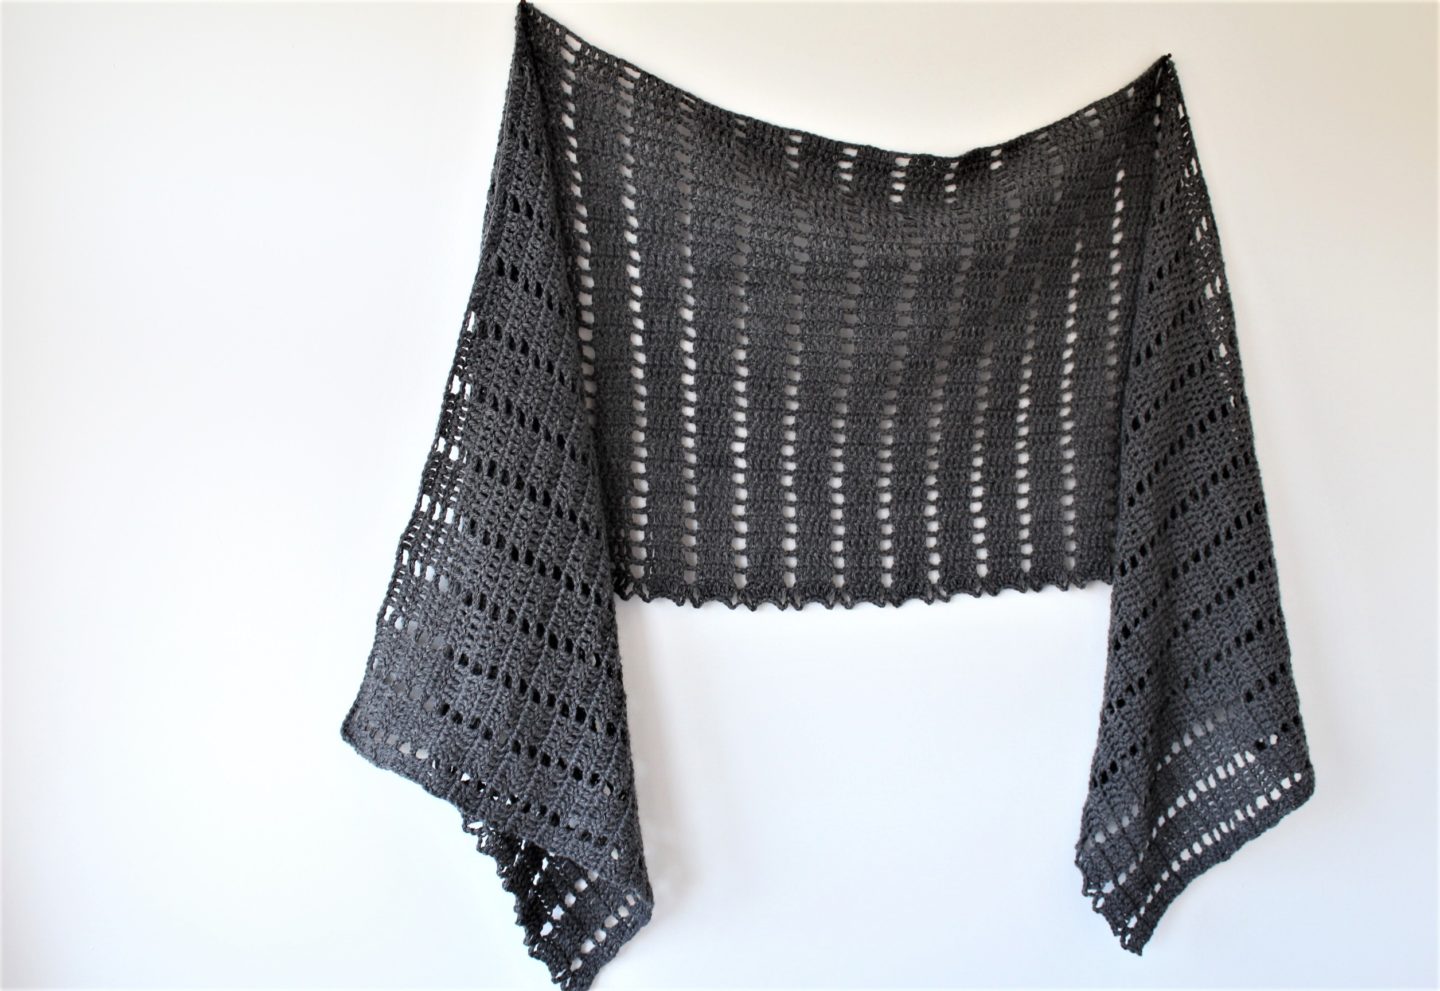 Darla shawl - free crochet pattern